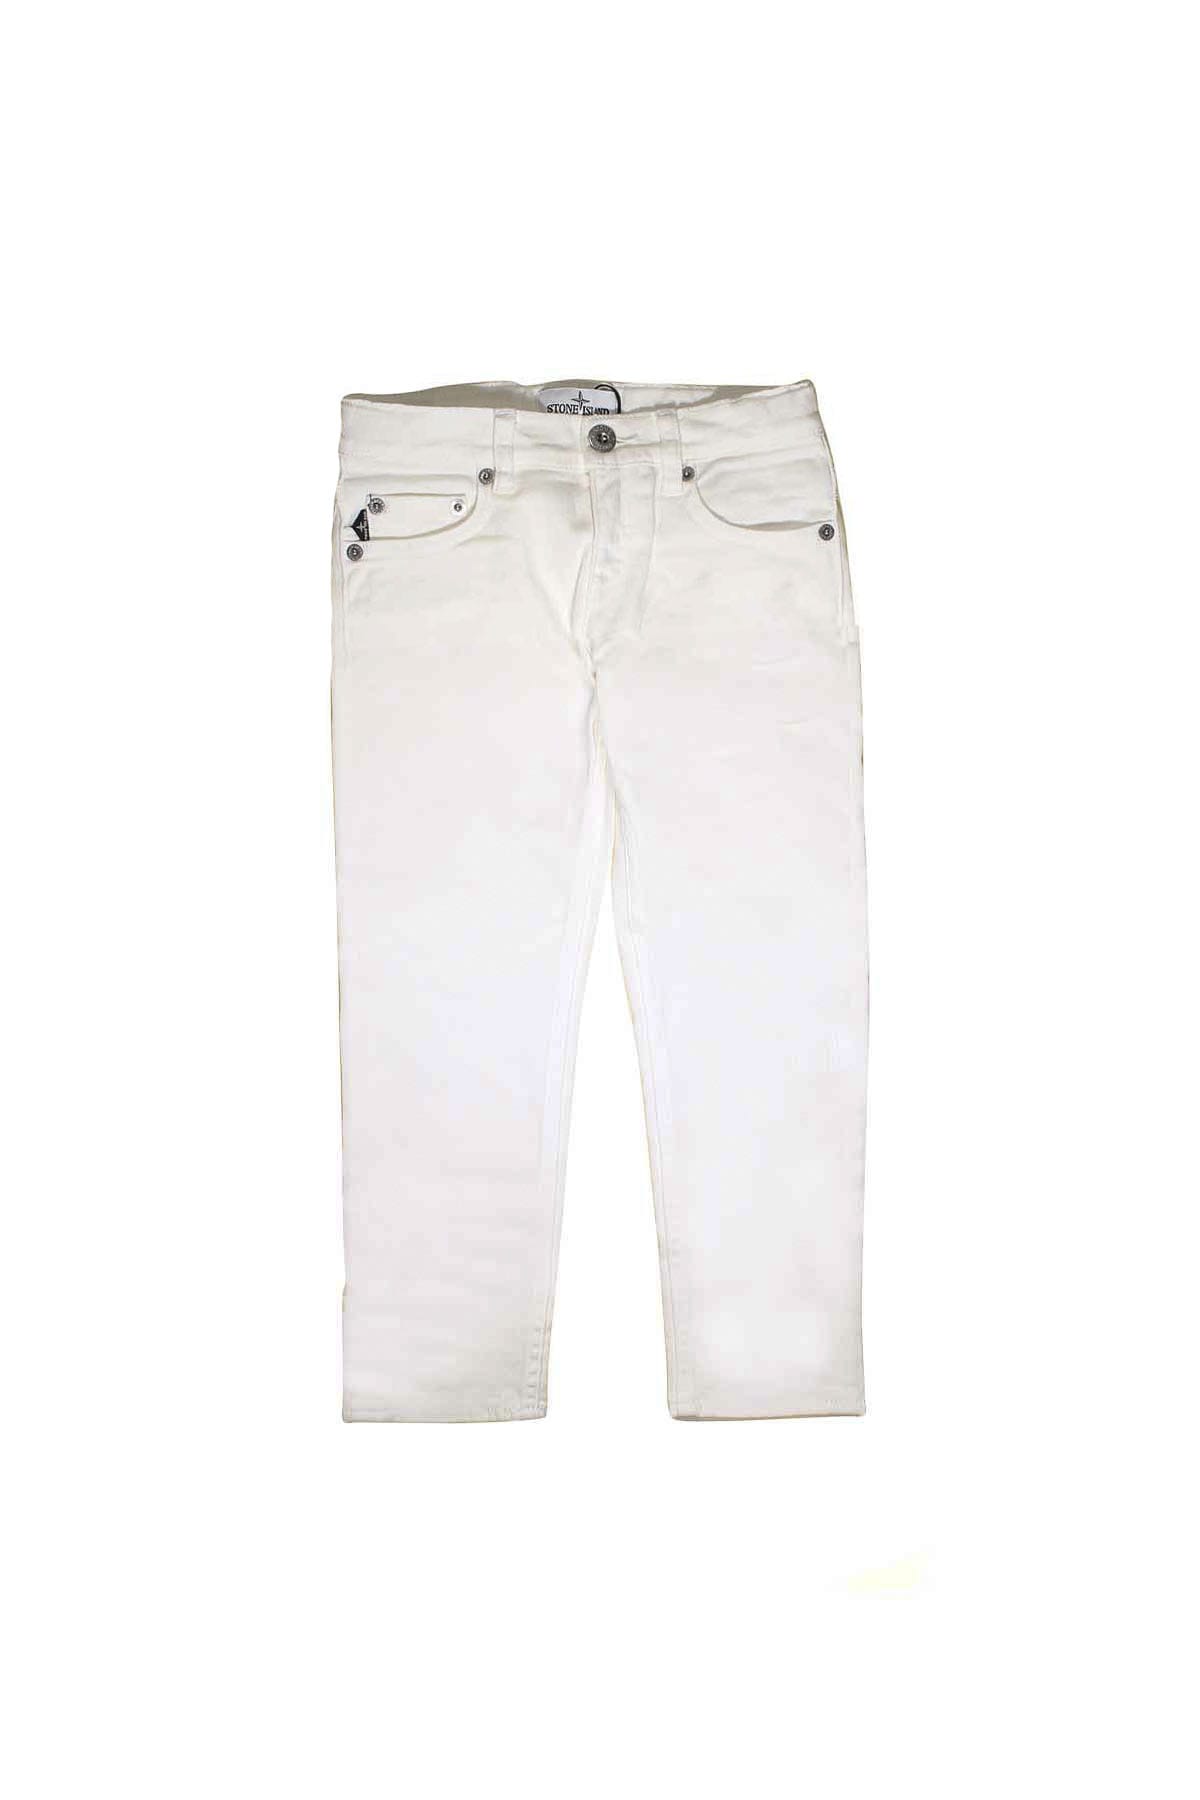 white stone island jeans